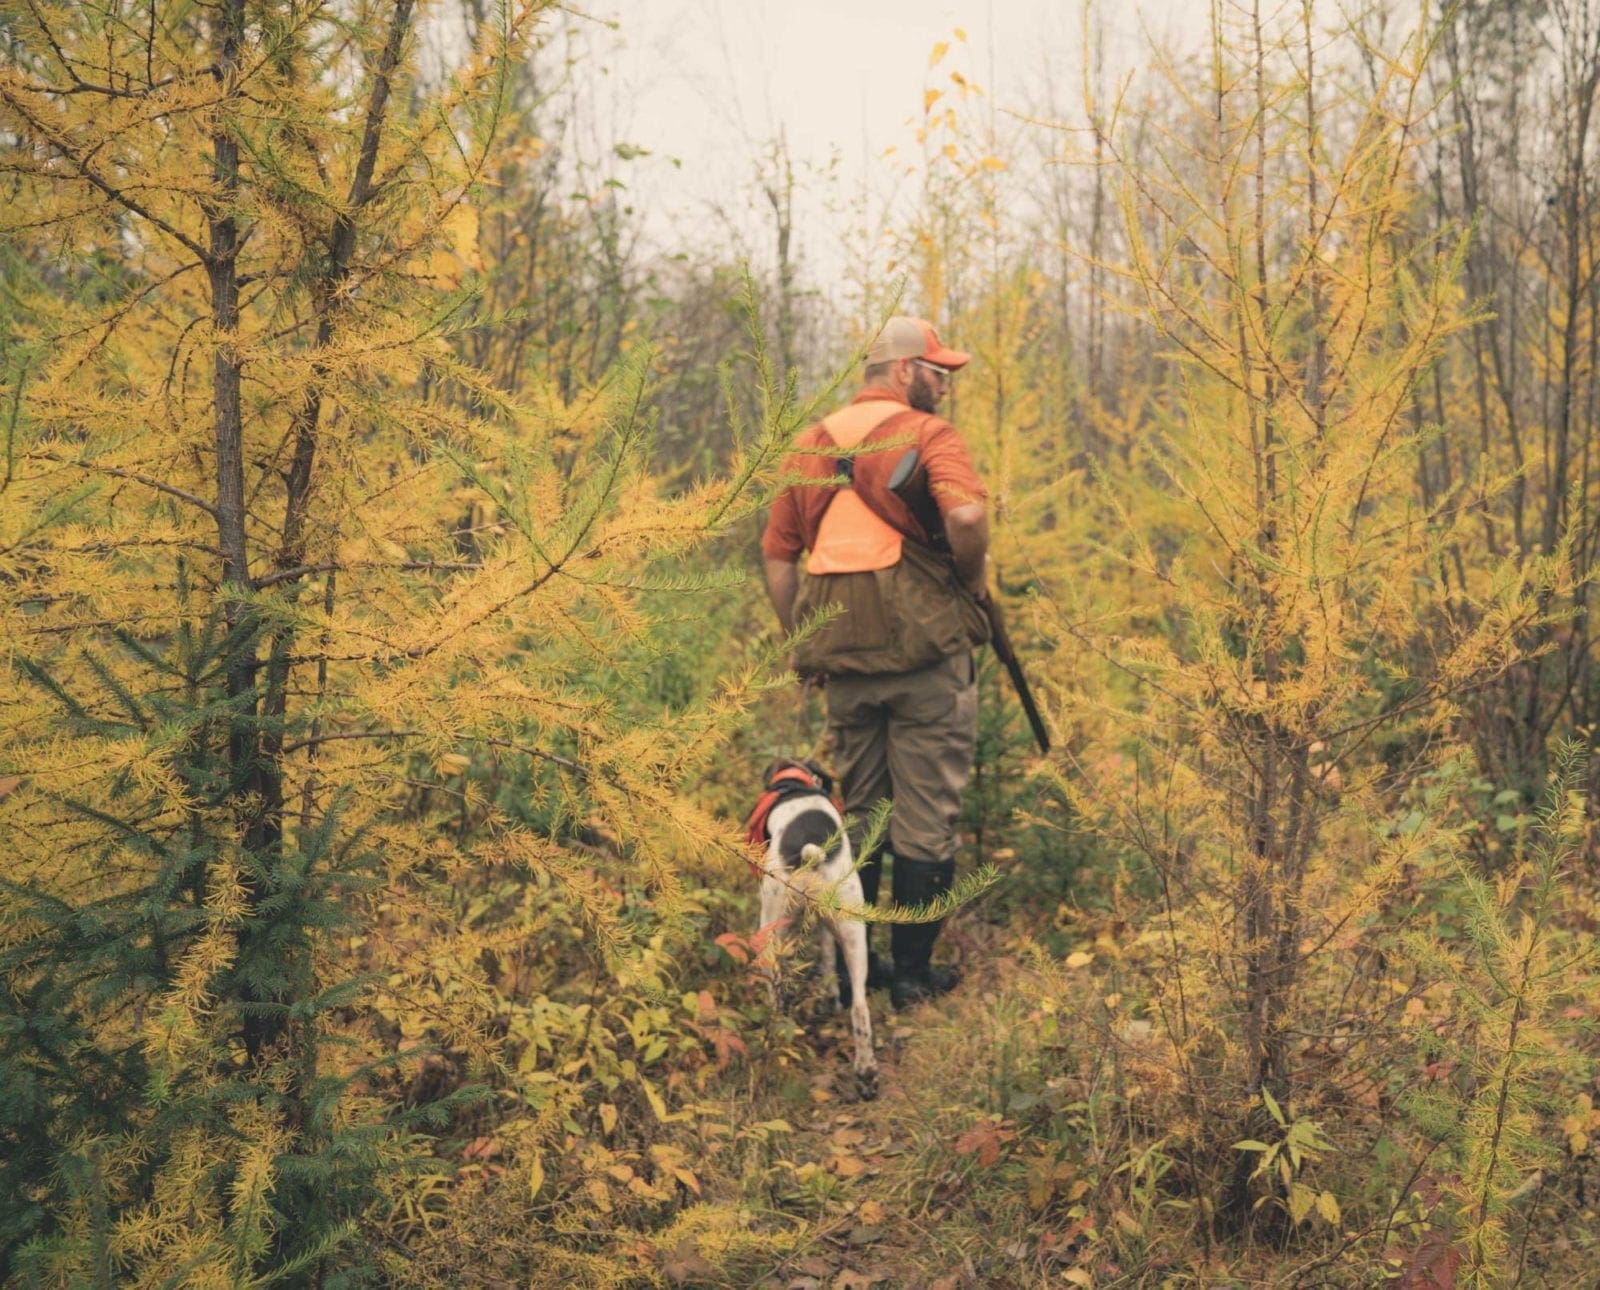 A hunter walks through tamaracks while hunting grouse and woodcock with his bird dog.